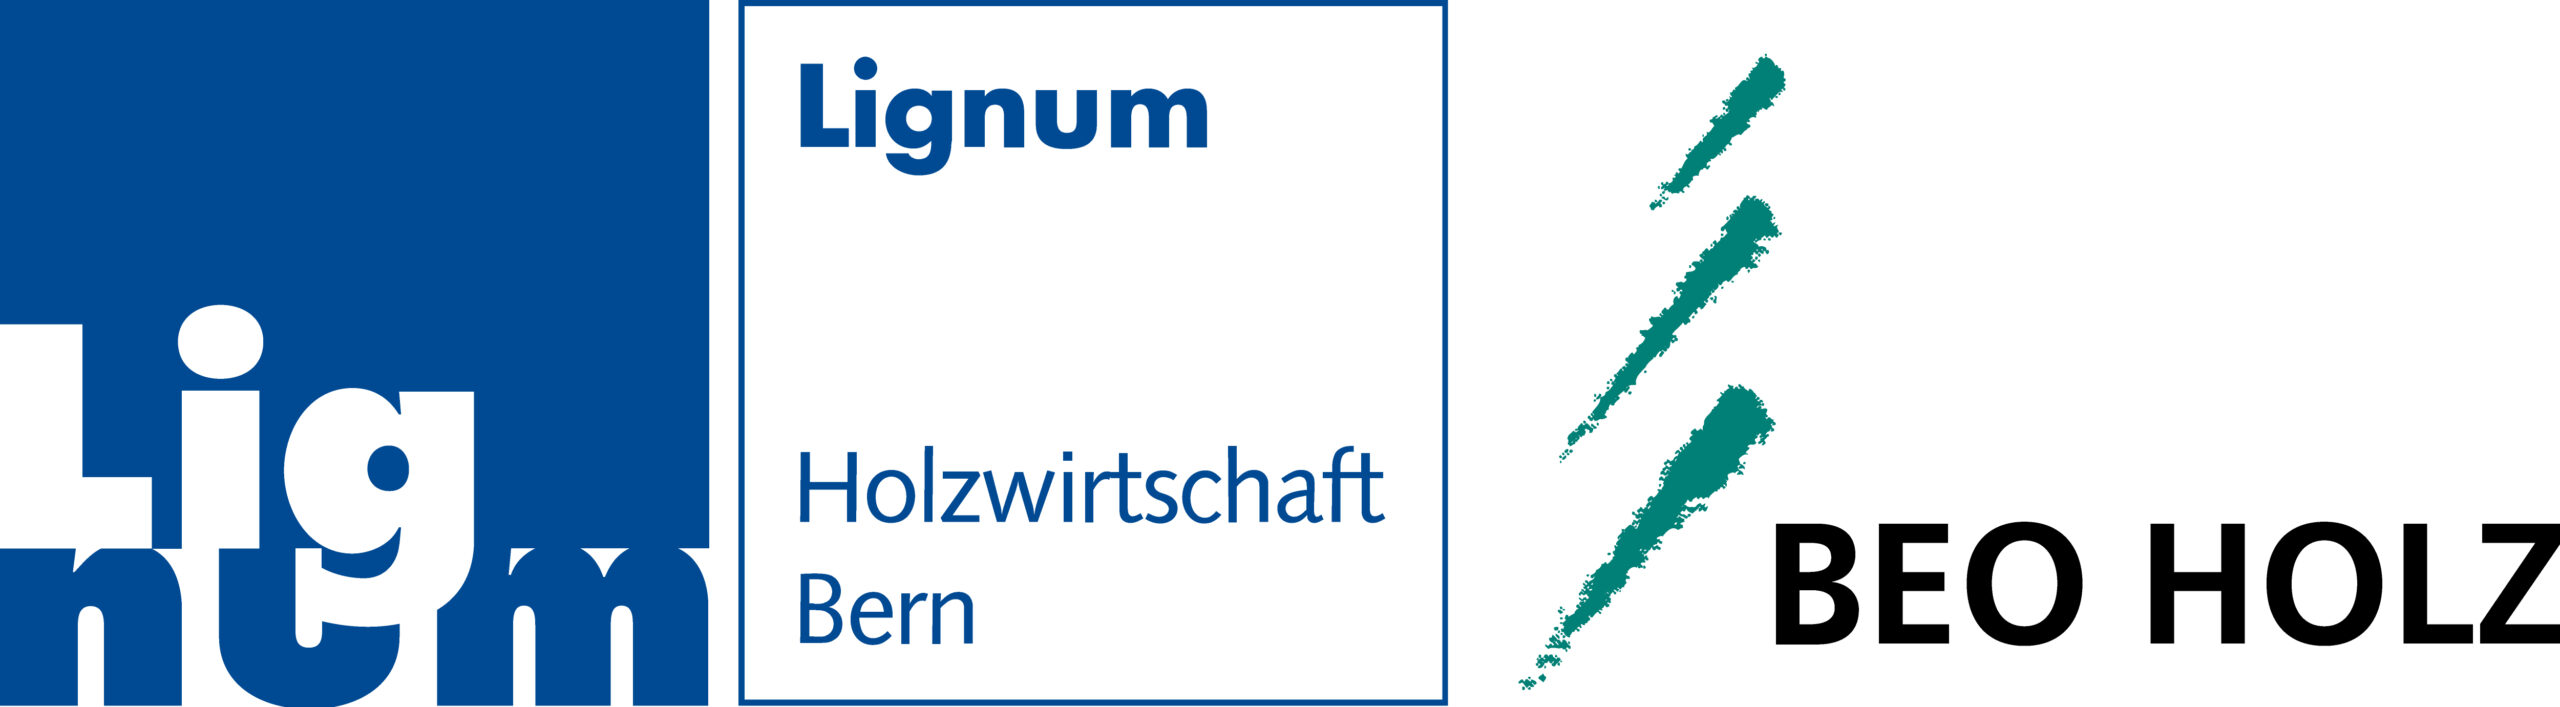 Lignum_Holzwirtschaft_Bern_BEO_Holz_Logo_RGB